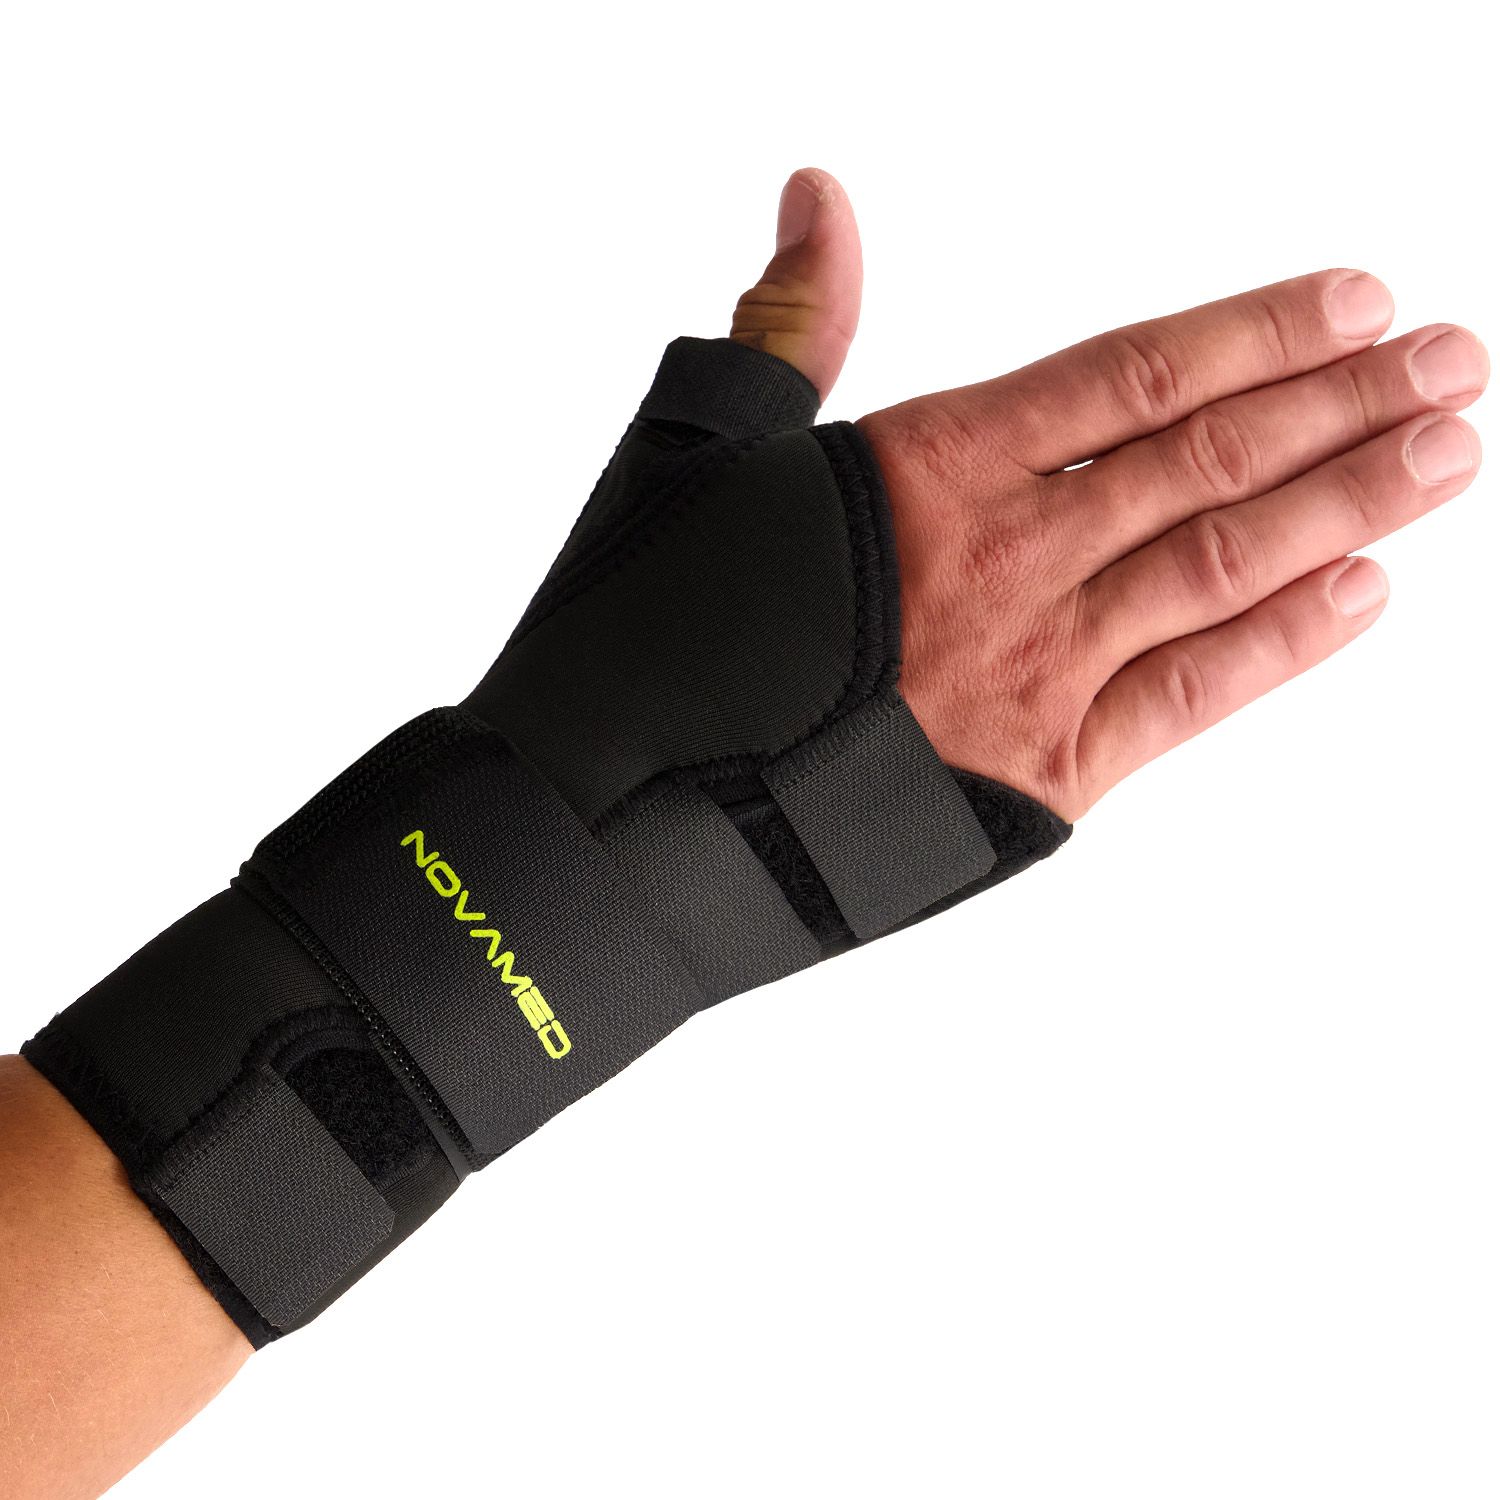 novamed thumb support wrist splint for sale